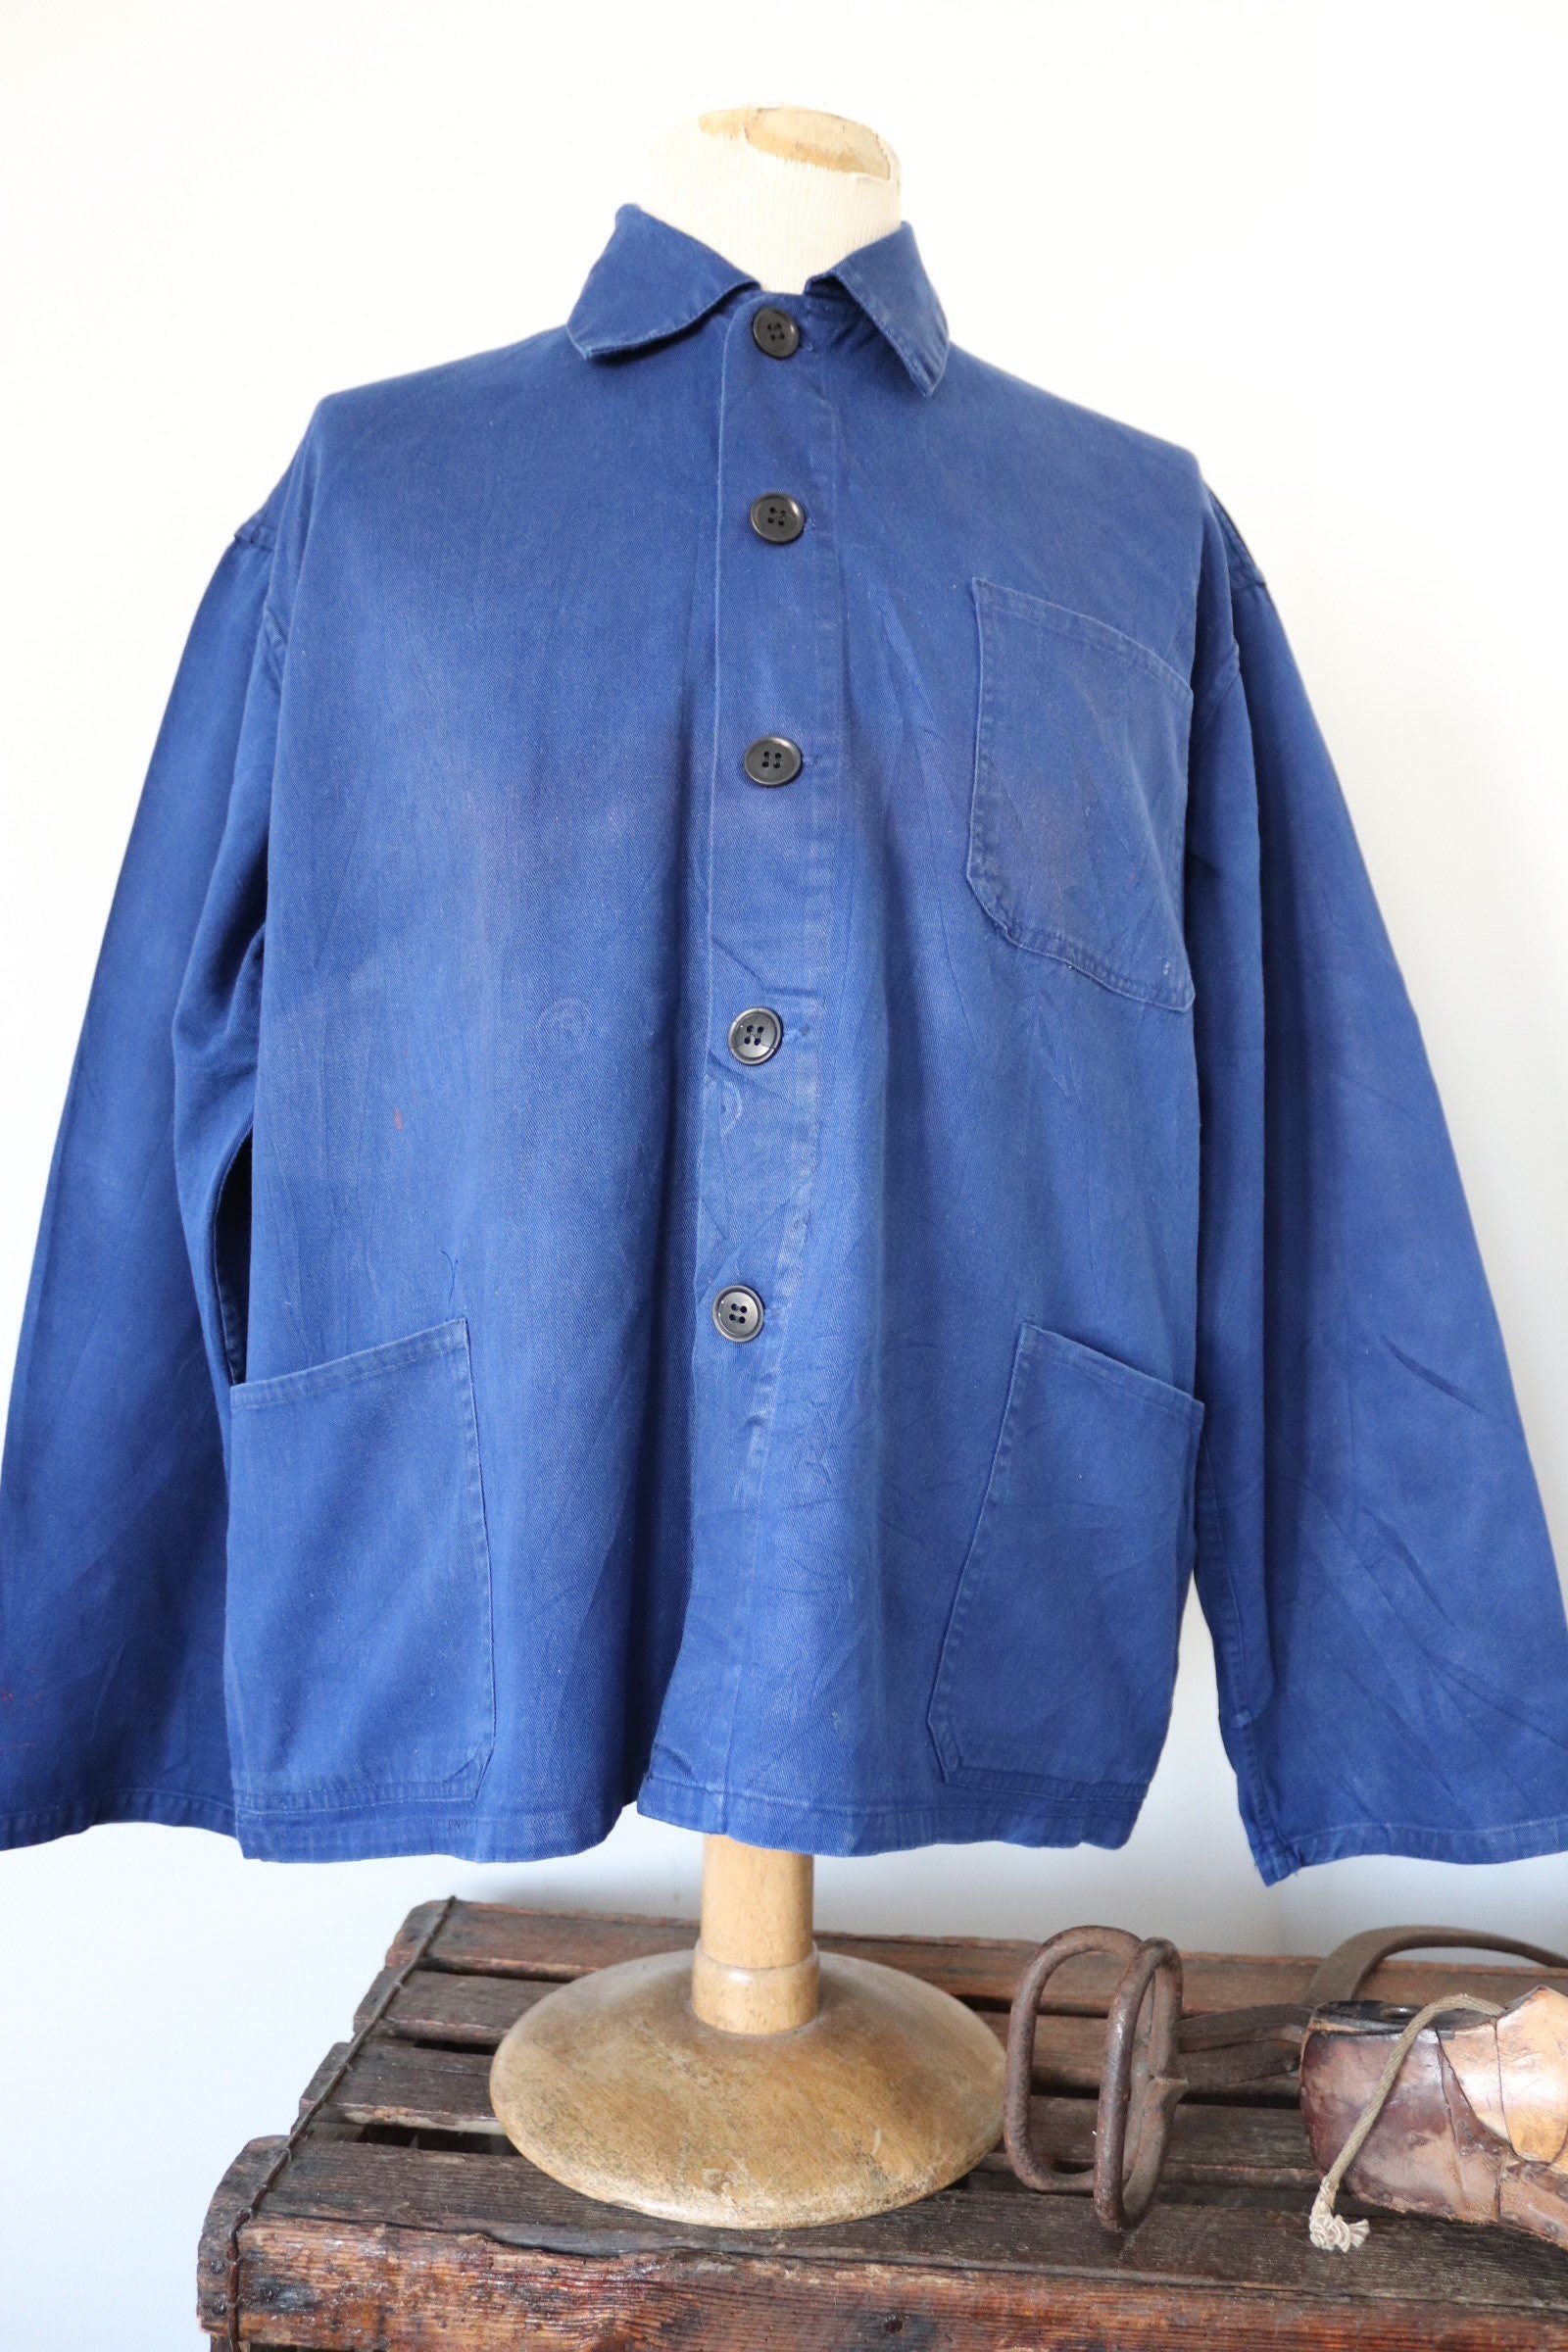 Vintage french indigo blue cotton twill work chore jacket 52 chest workwear